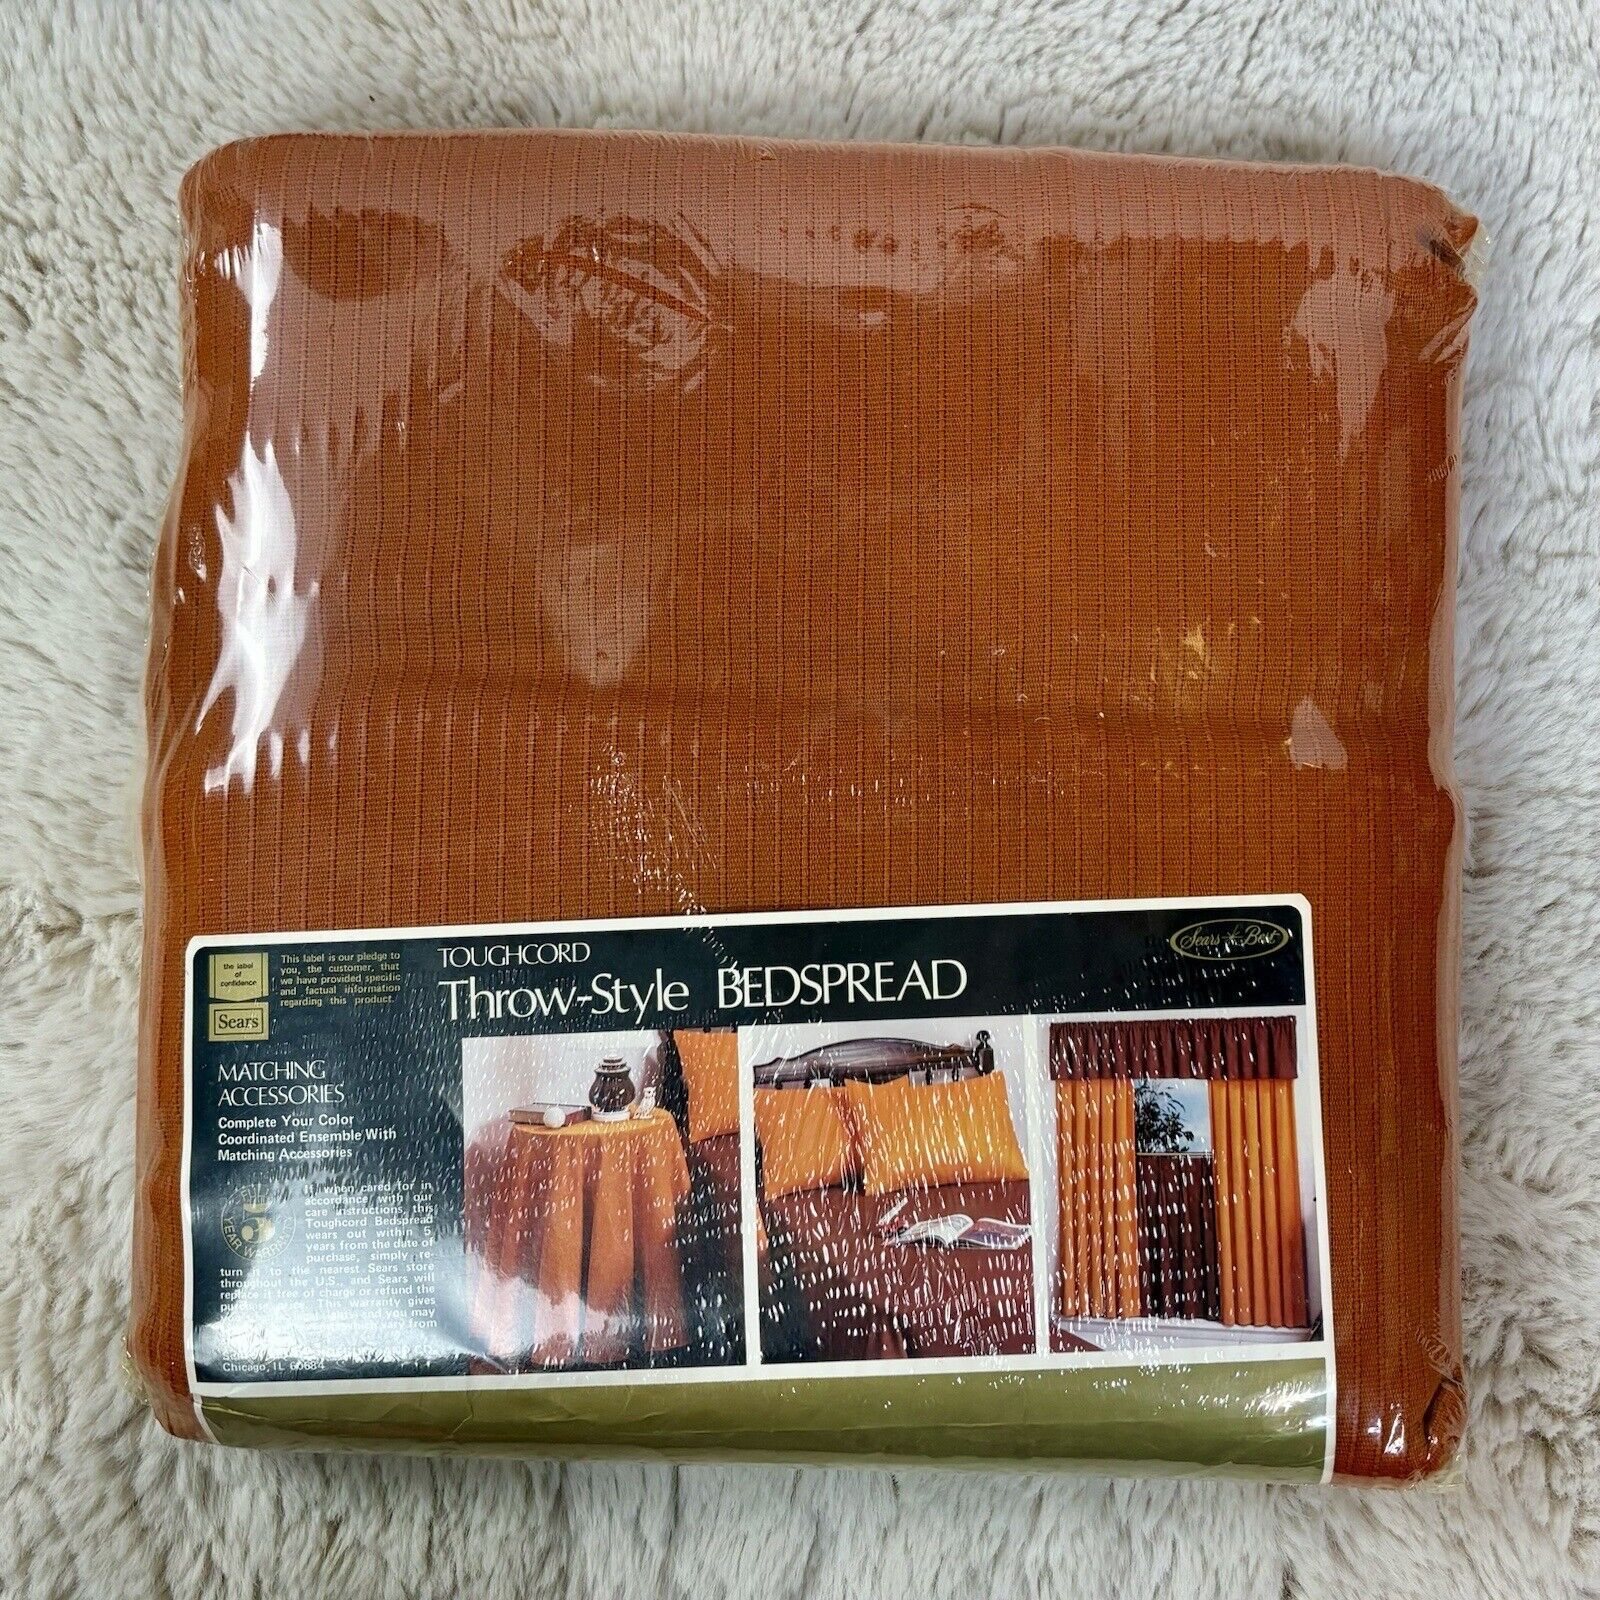 VTG Sears Toughcord Bedspread Throw Cover Blanket Retro Copper Full 90\